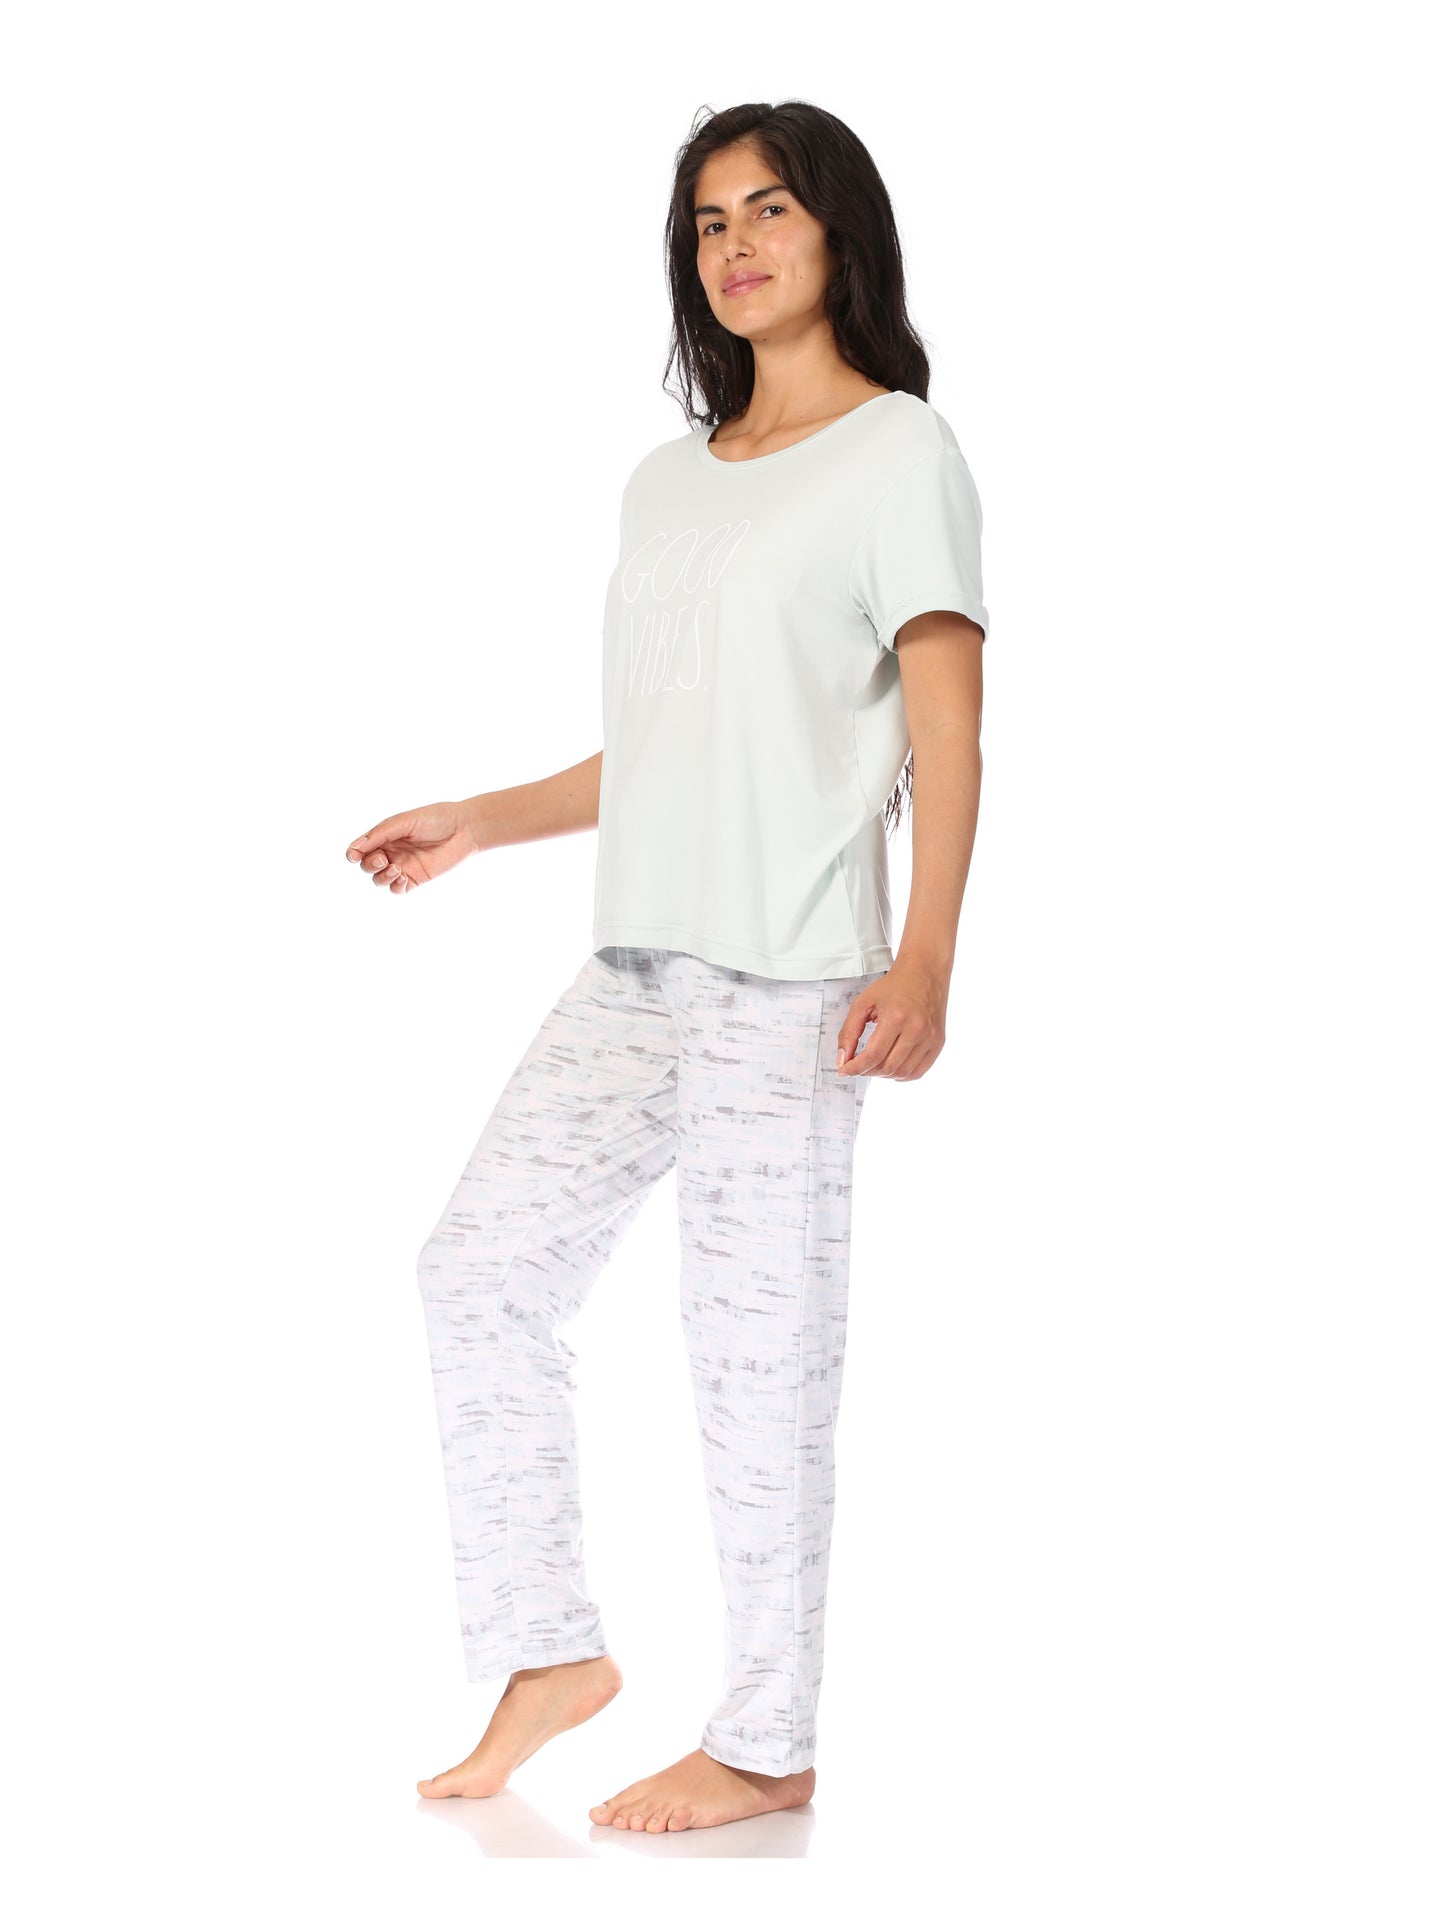 Women's "GOOD VIBES" Short Sleeve Top and Drawstring Pant Pajama Set - Rae Dunn Wear - W Pants Set